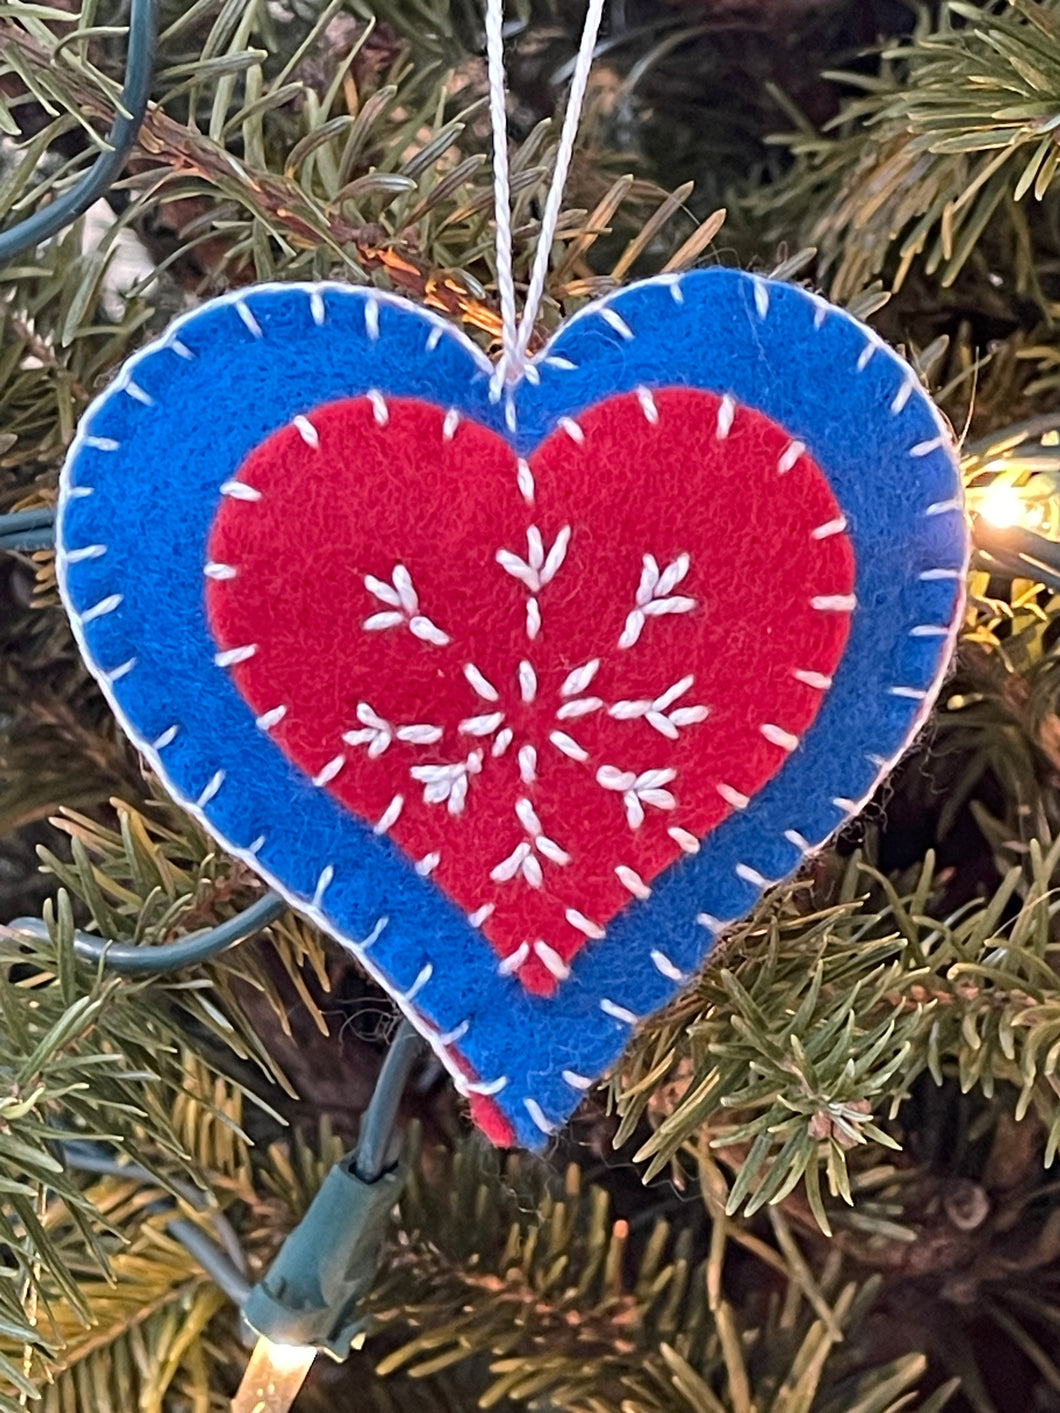 Heart ornament